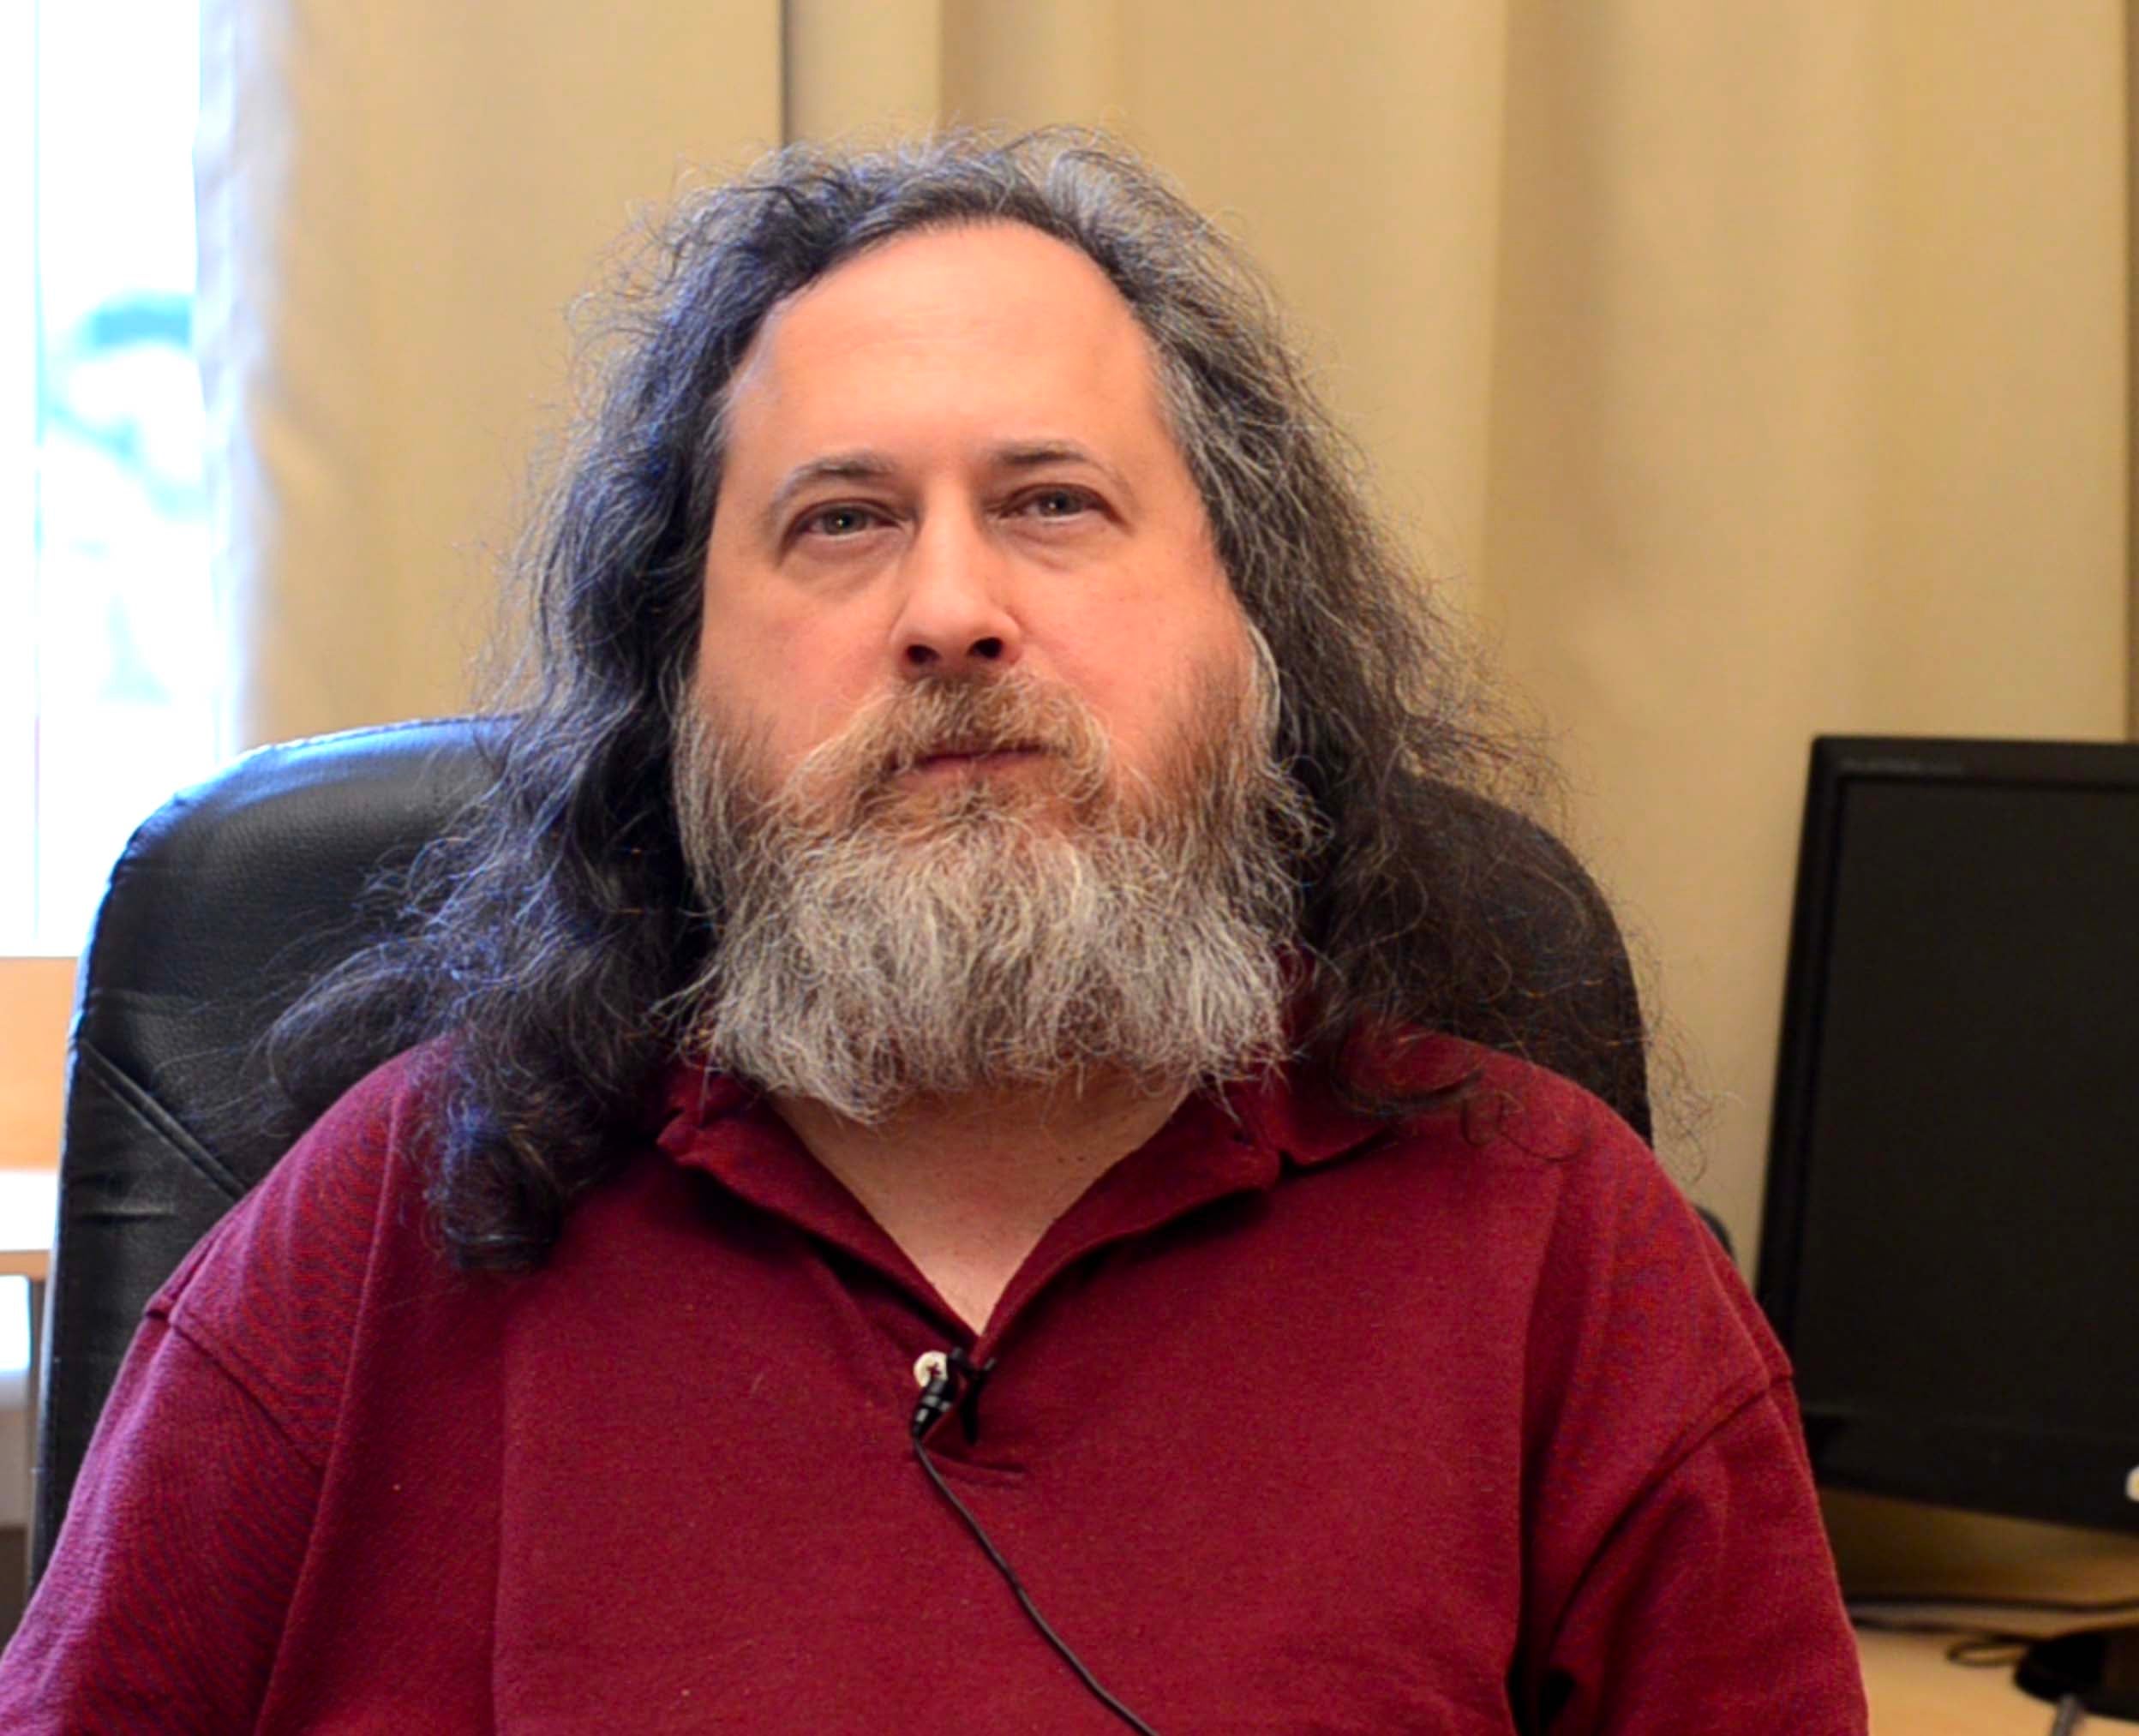 Free Software Free Society 3rd Edition by Richard M. Stallman